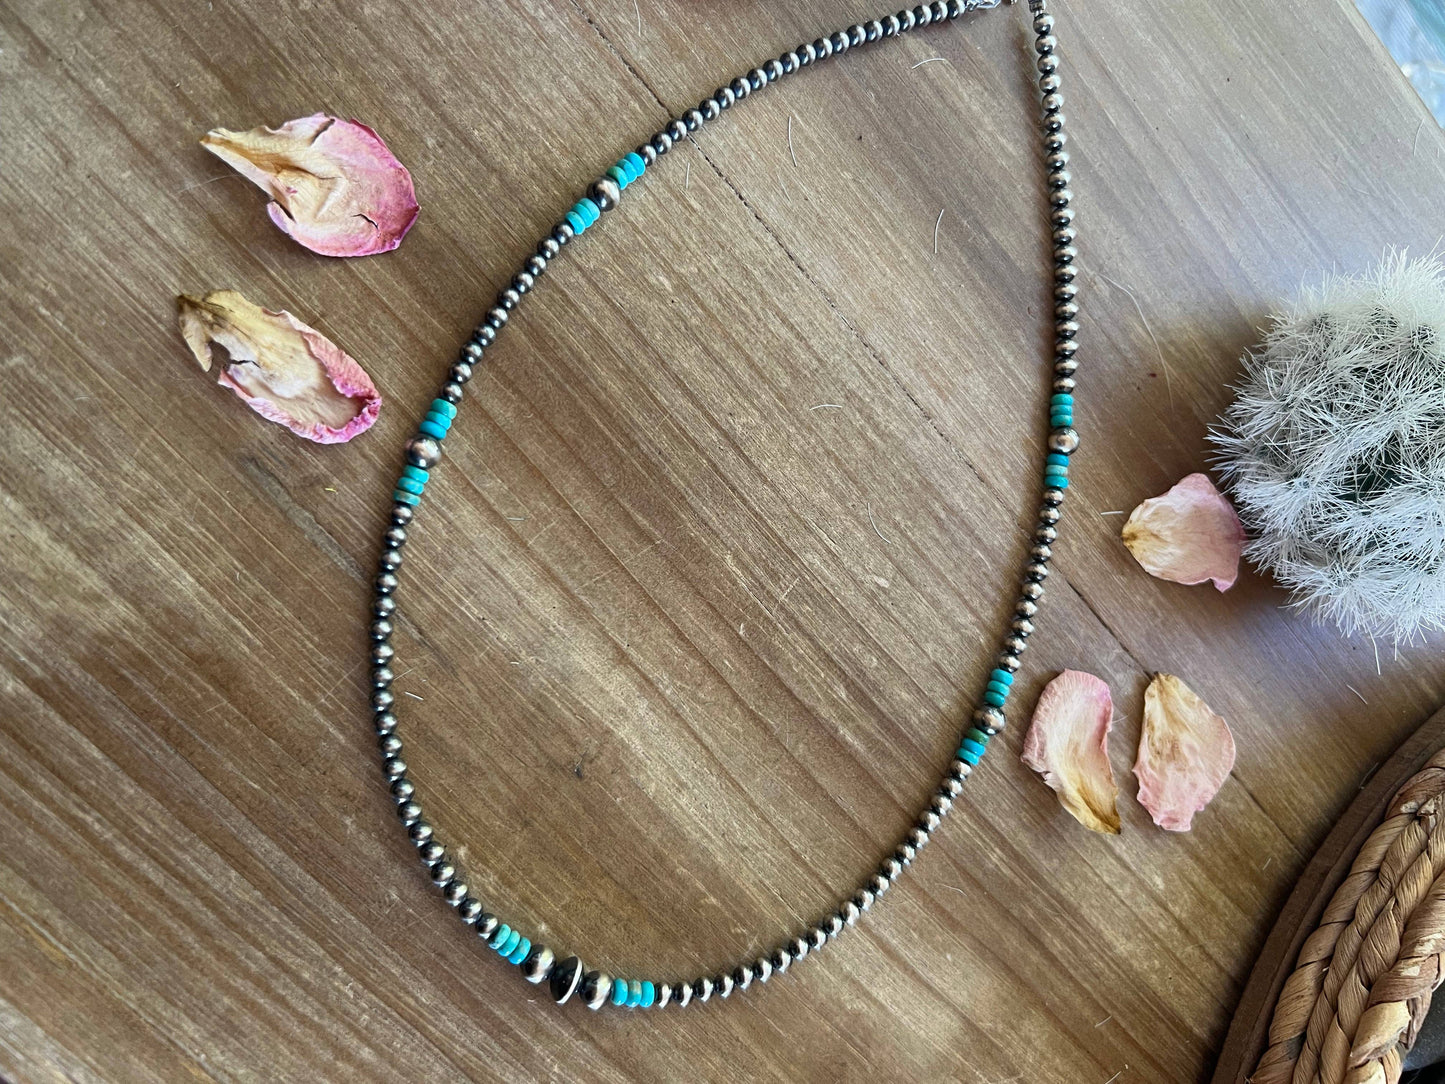 the |Tishomingo| Navajo + Turquoise Necklace